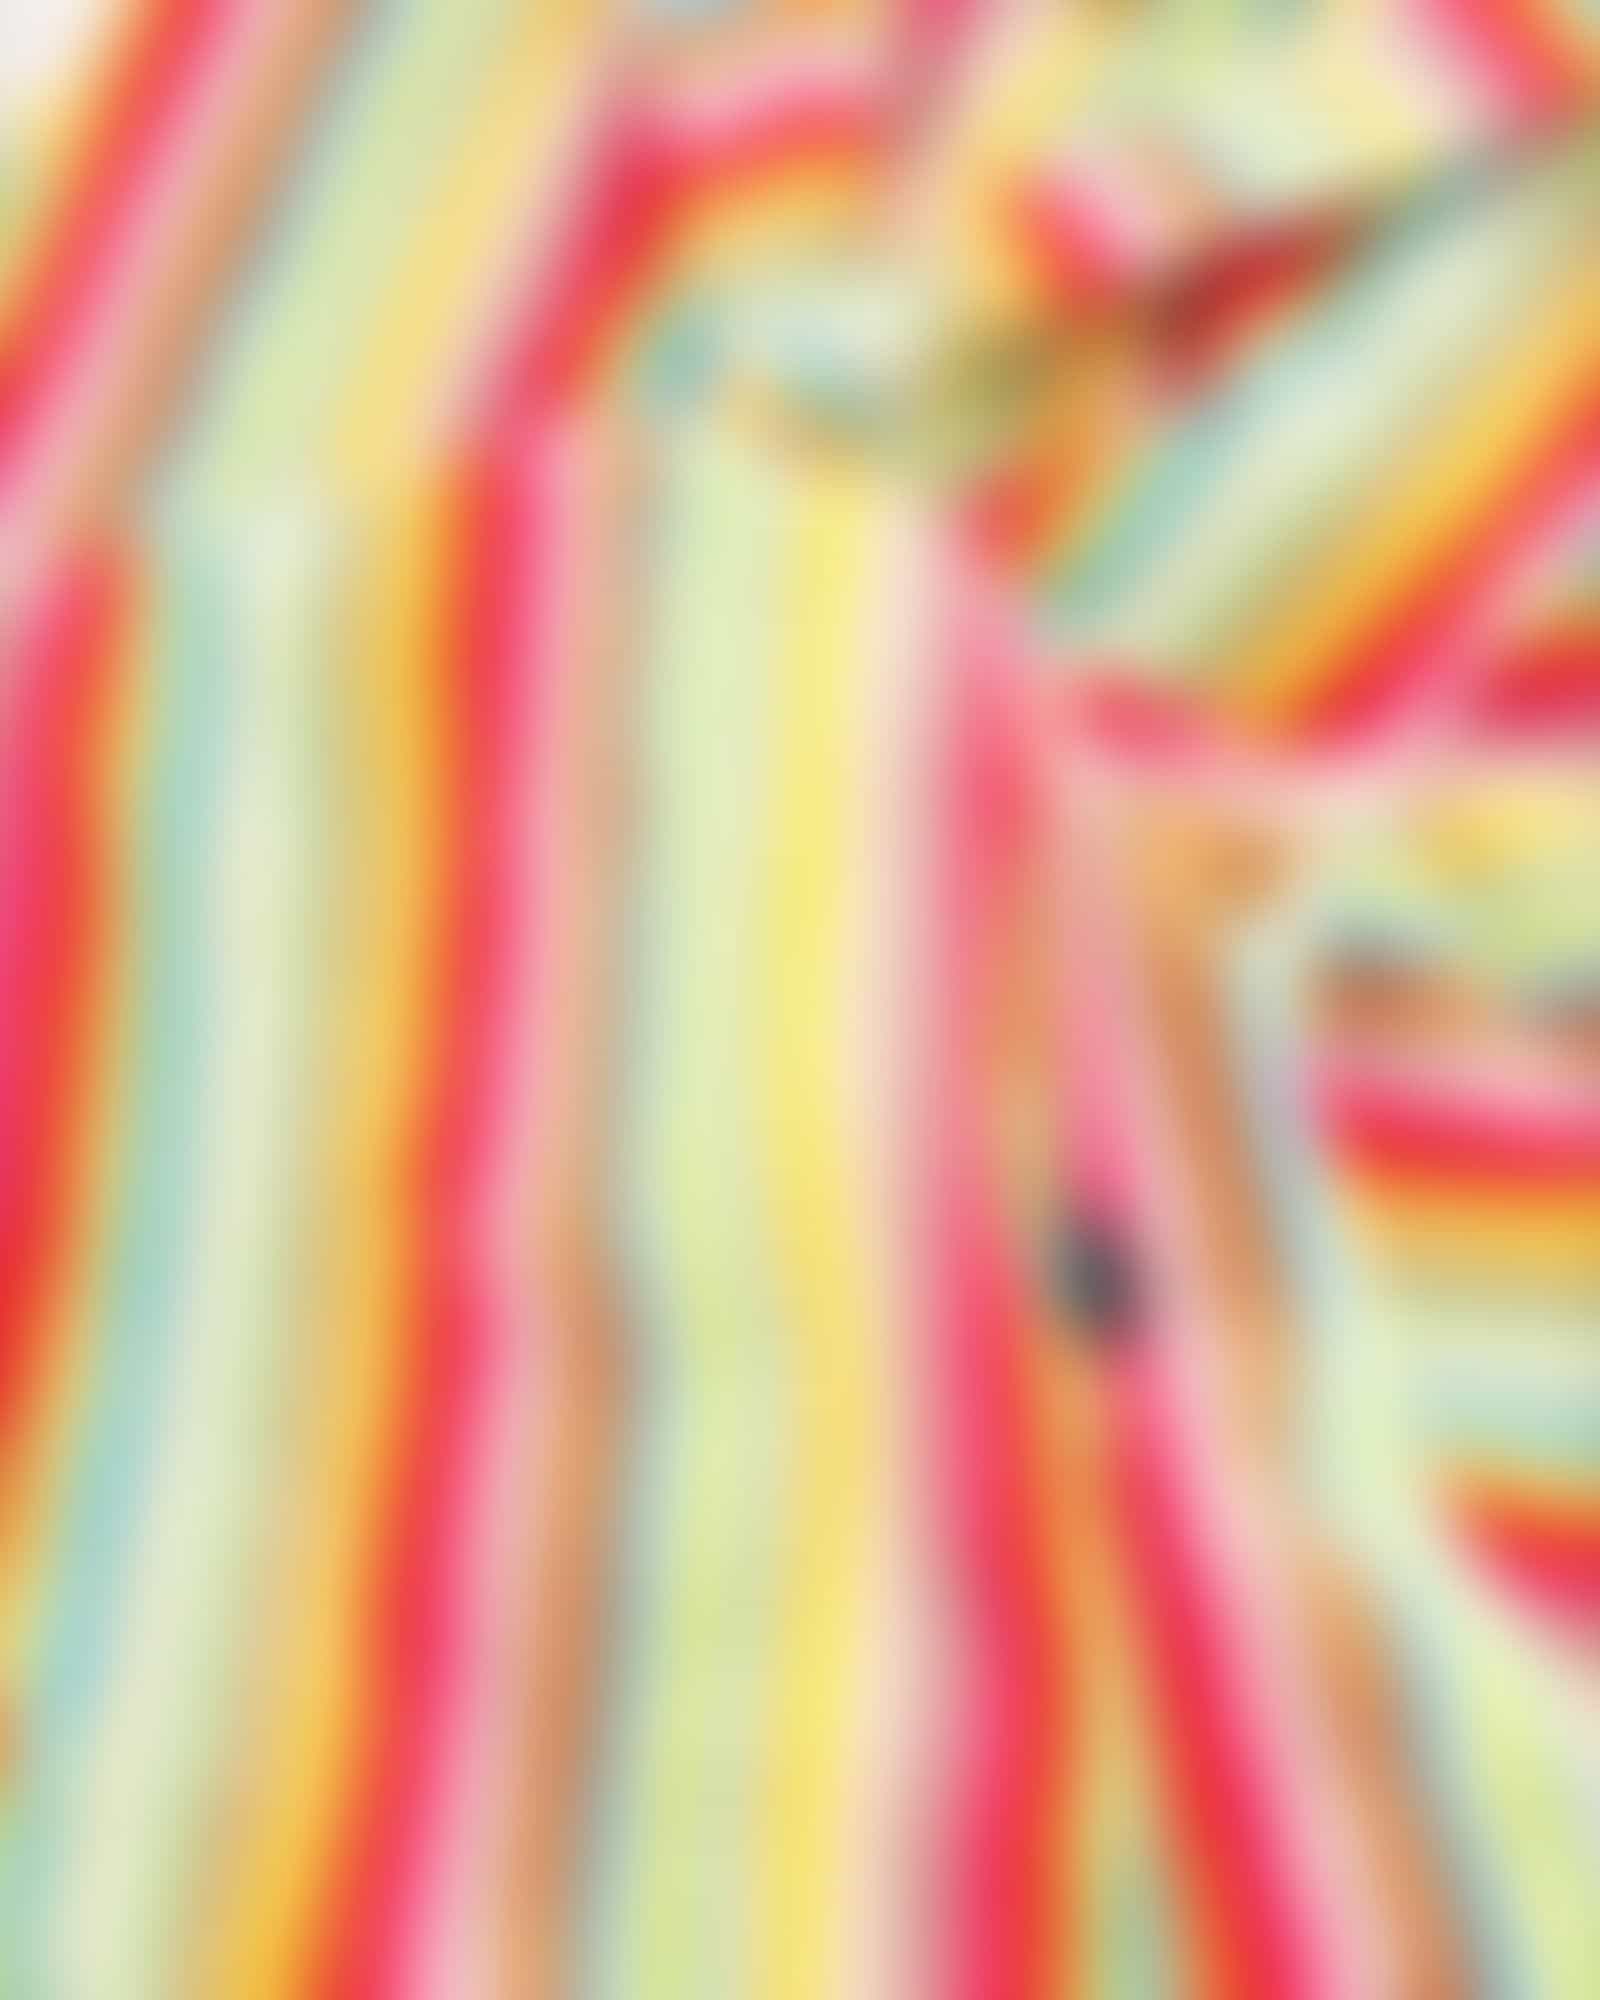 Cawö - Damen Bademantel Life Style - Kurzmantel mit Kapuze 7082 - Farbe: multicolor - 25 S